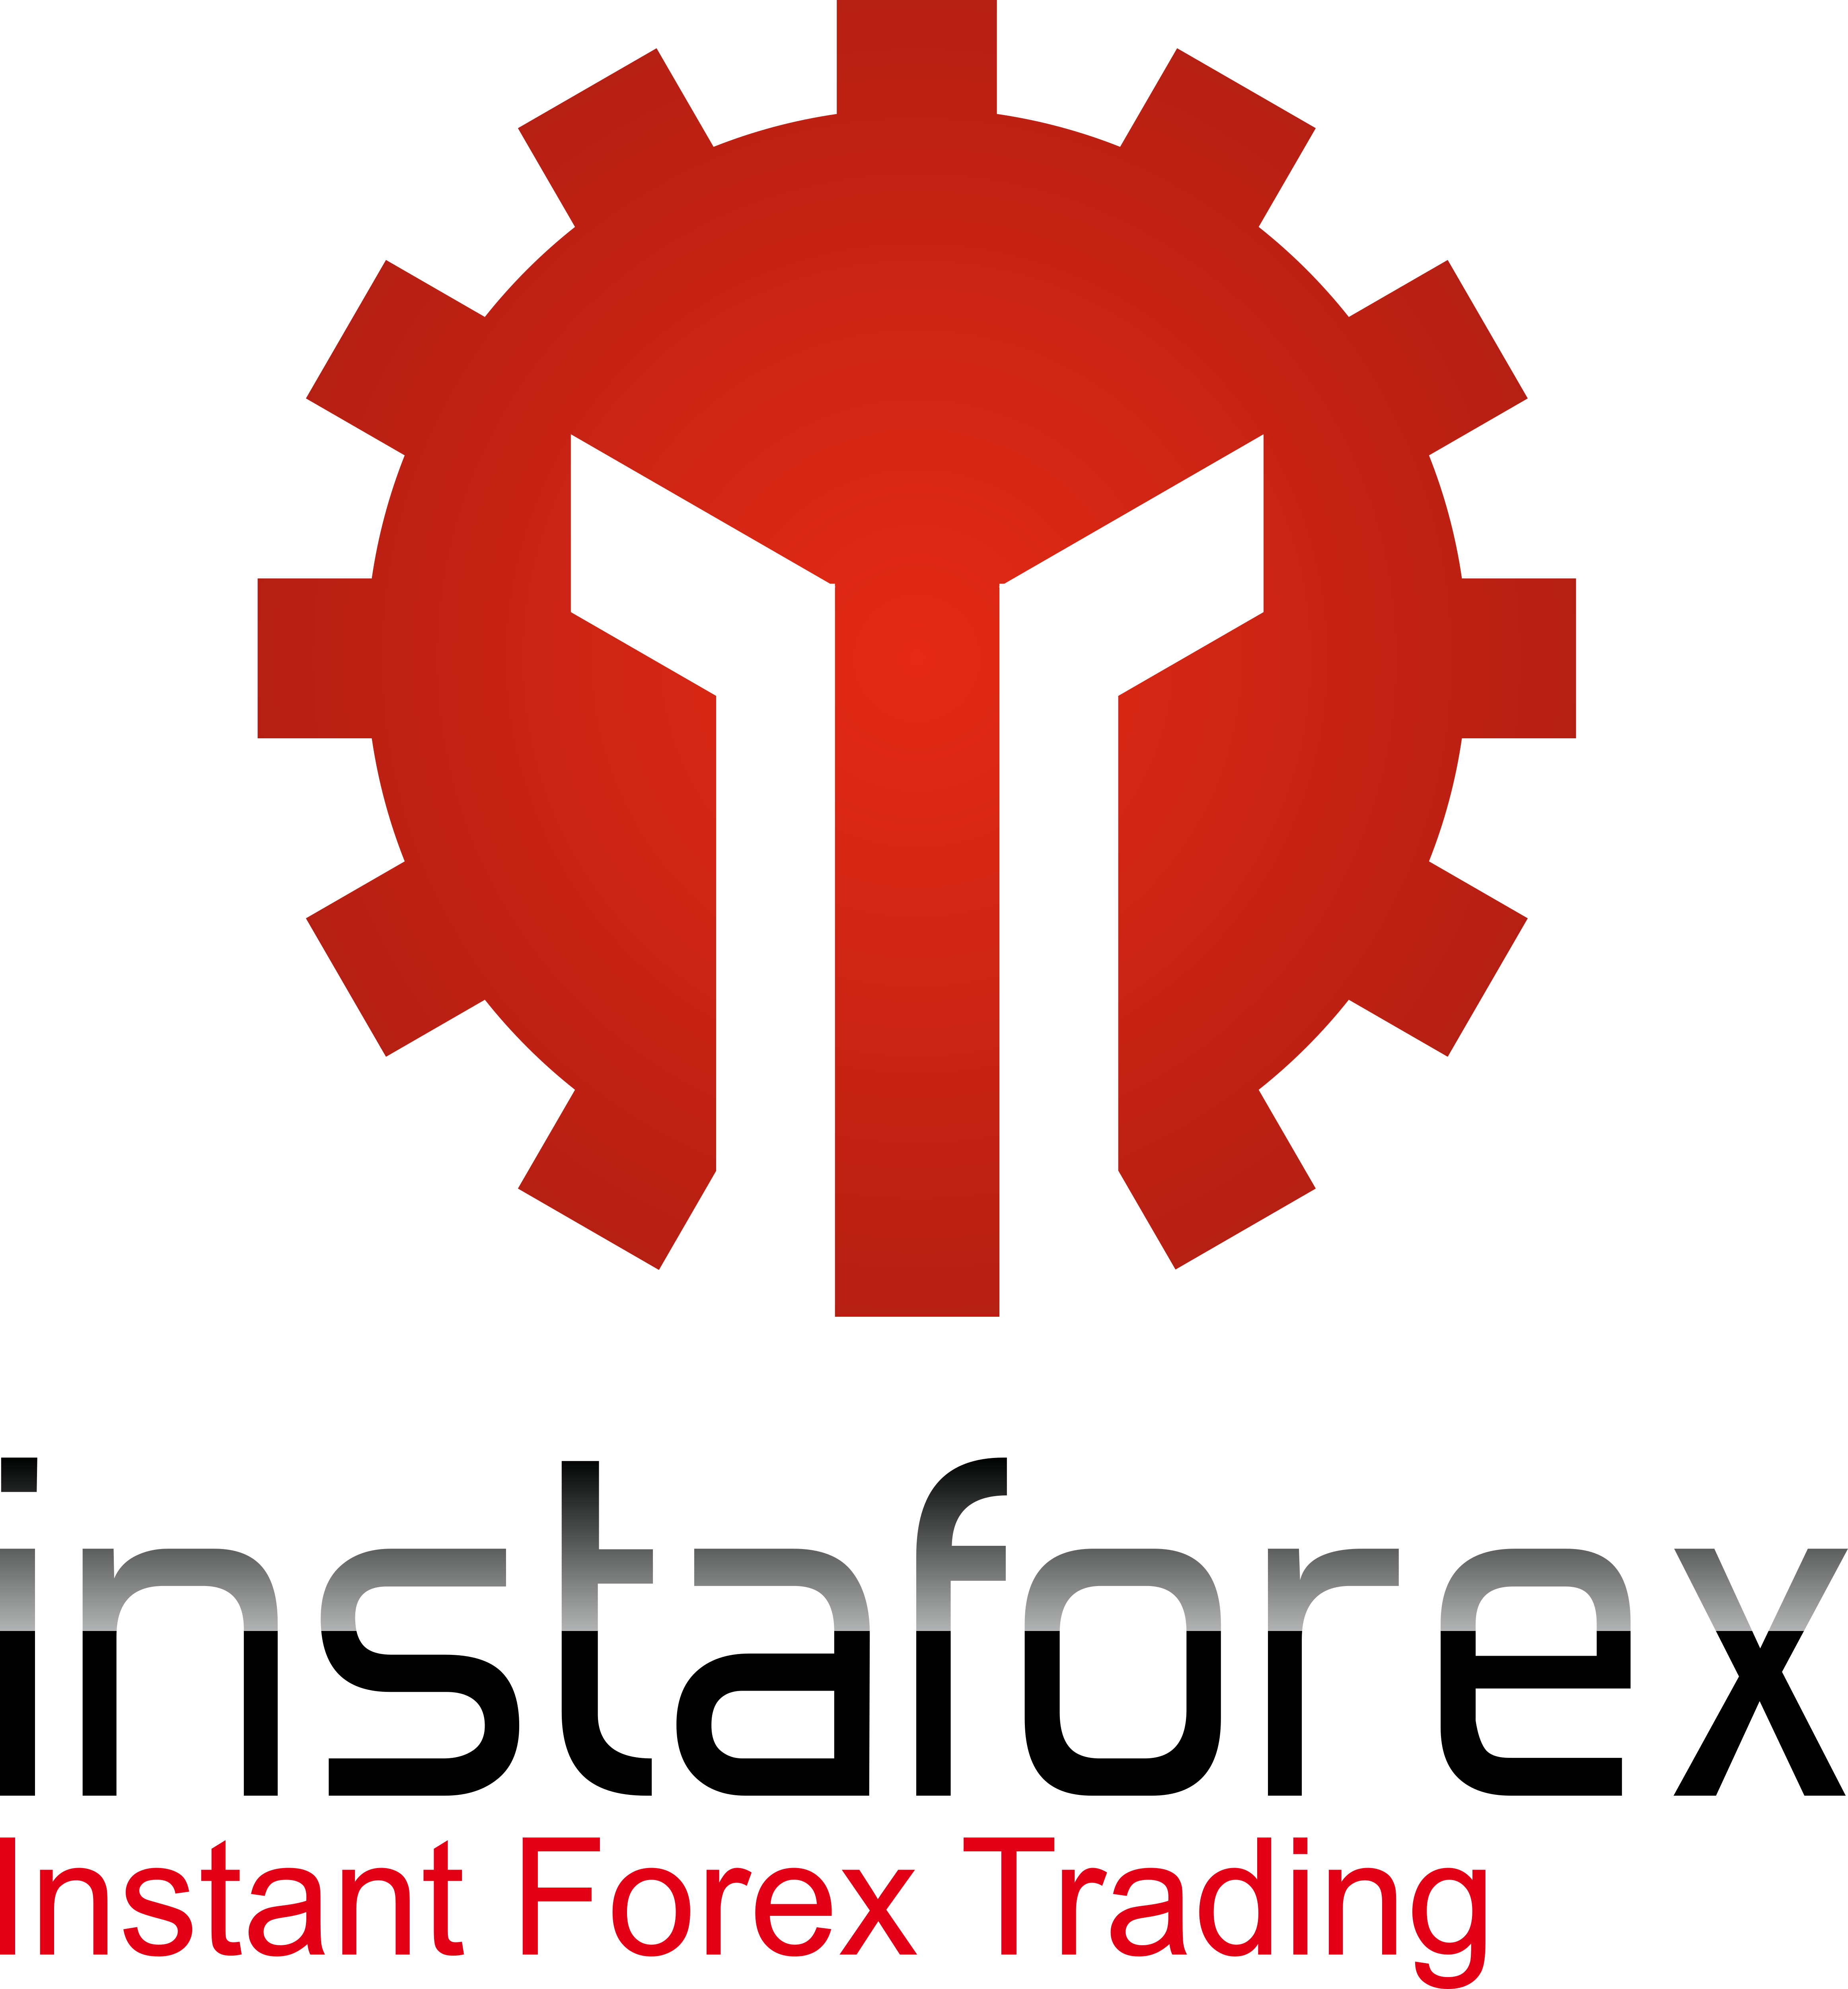 Instaforex malaysia download free forexcube forexfactory